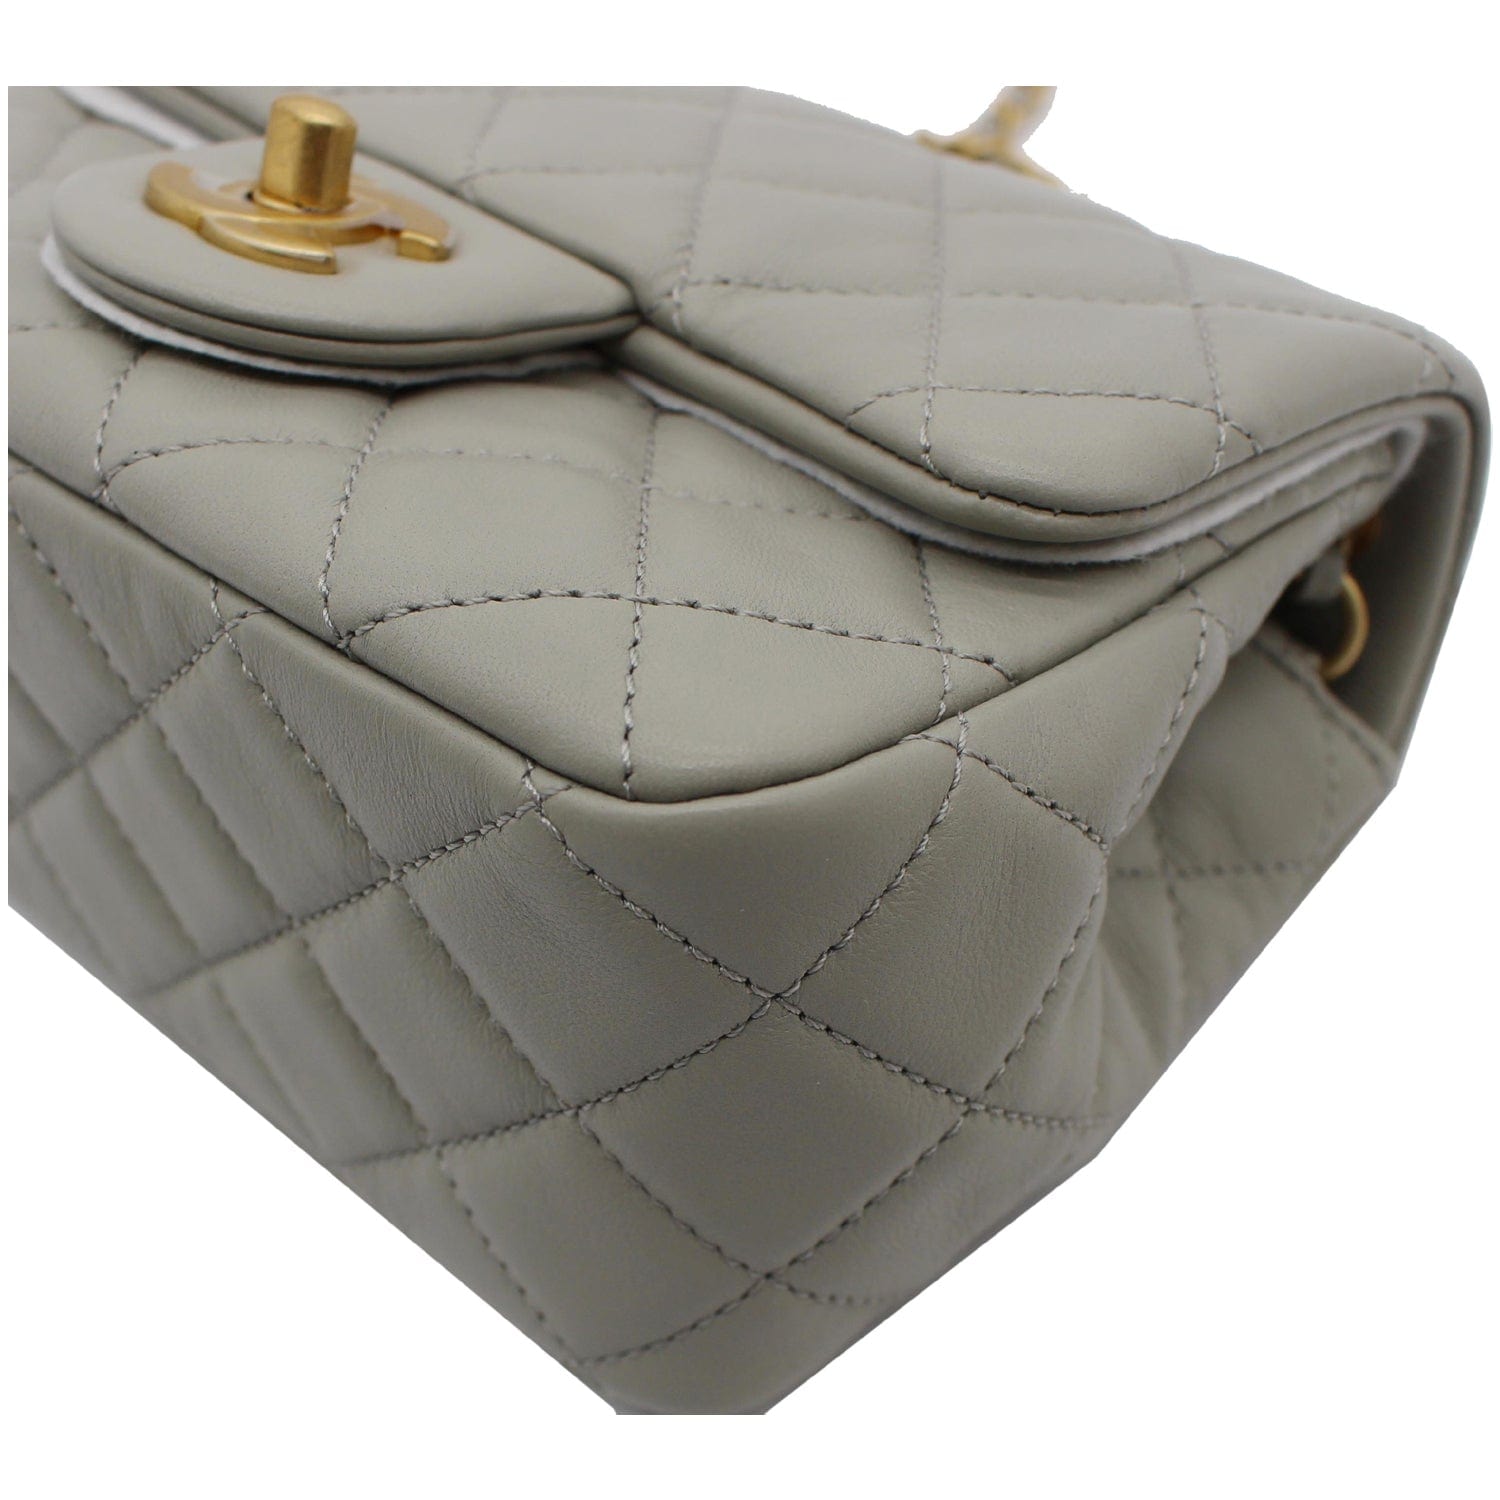 Chanel 22B Pearl Crush Mini Rectangular Flap Bag Lambskin Dark Beige G